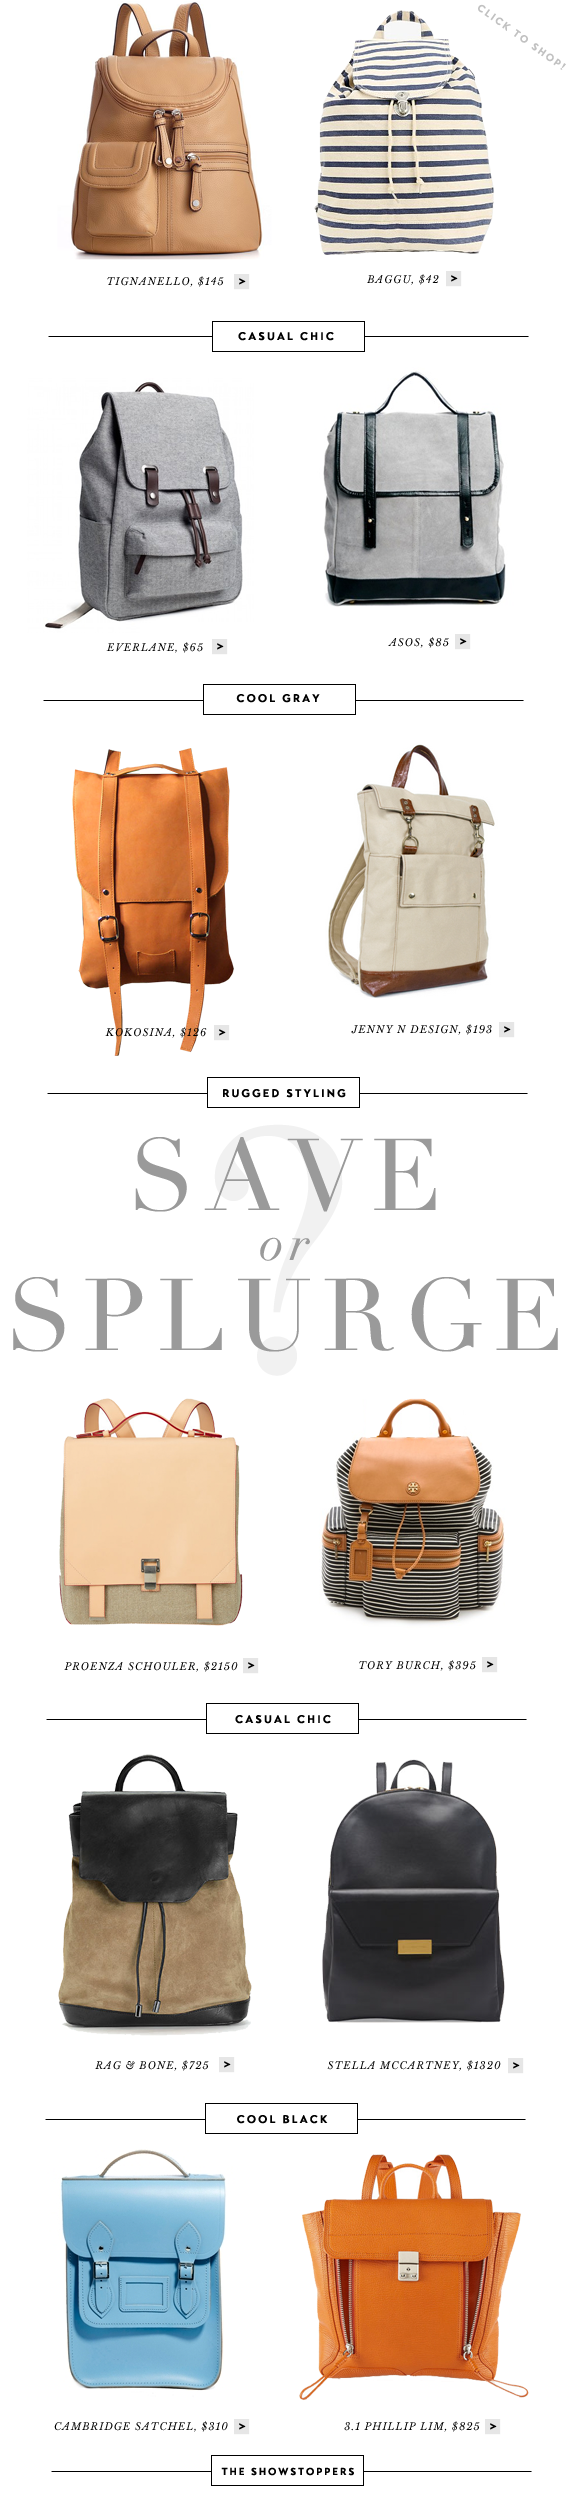 12 backpacks - budget and splurge options